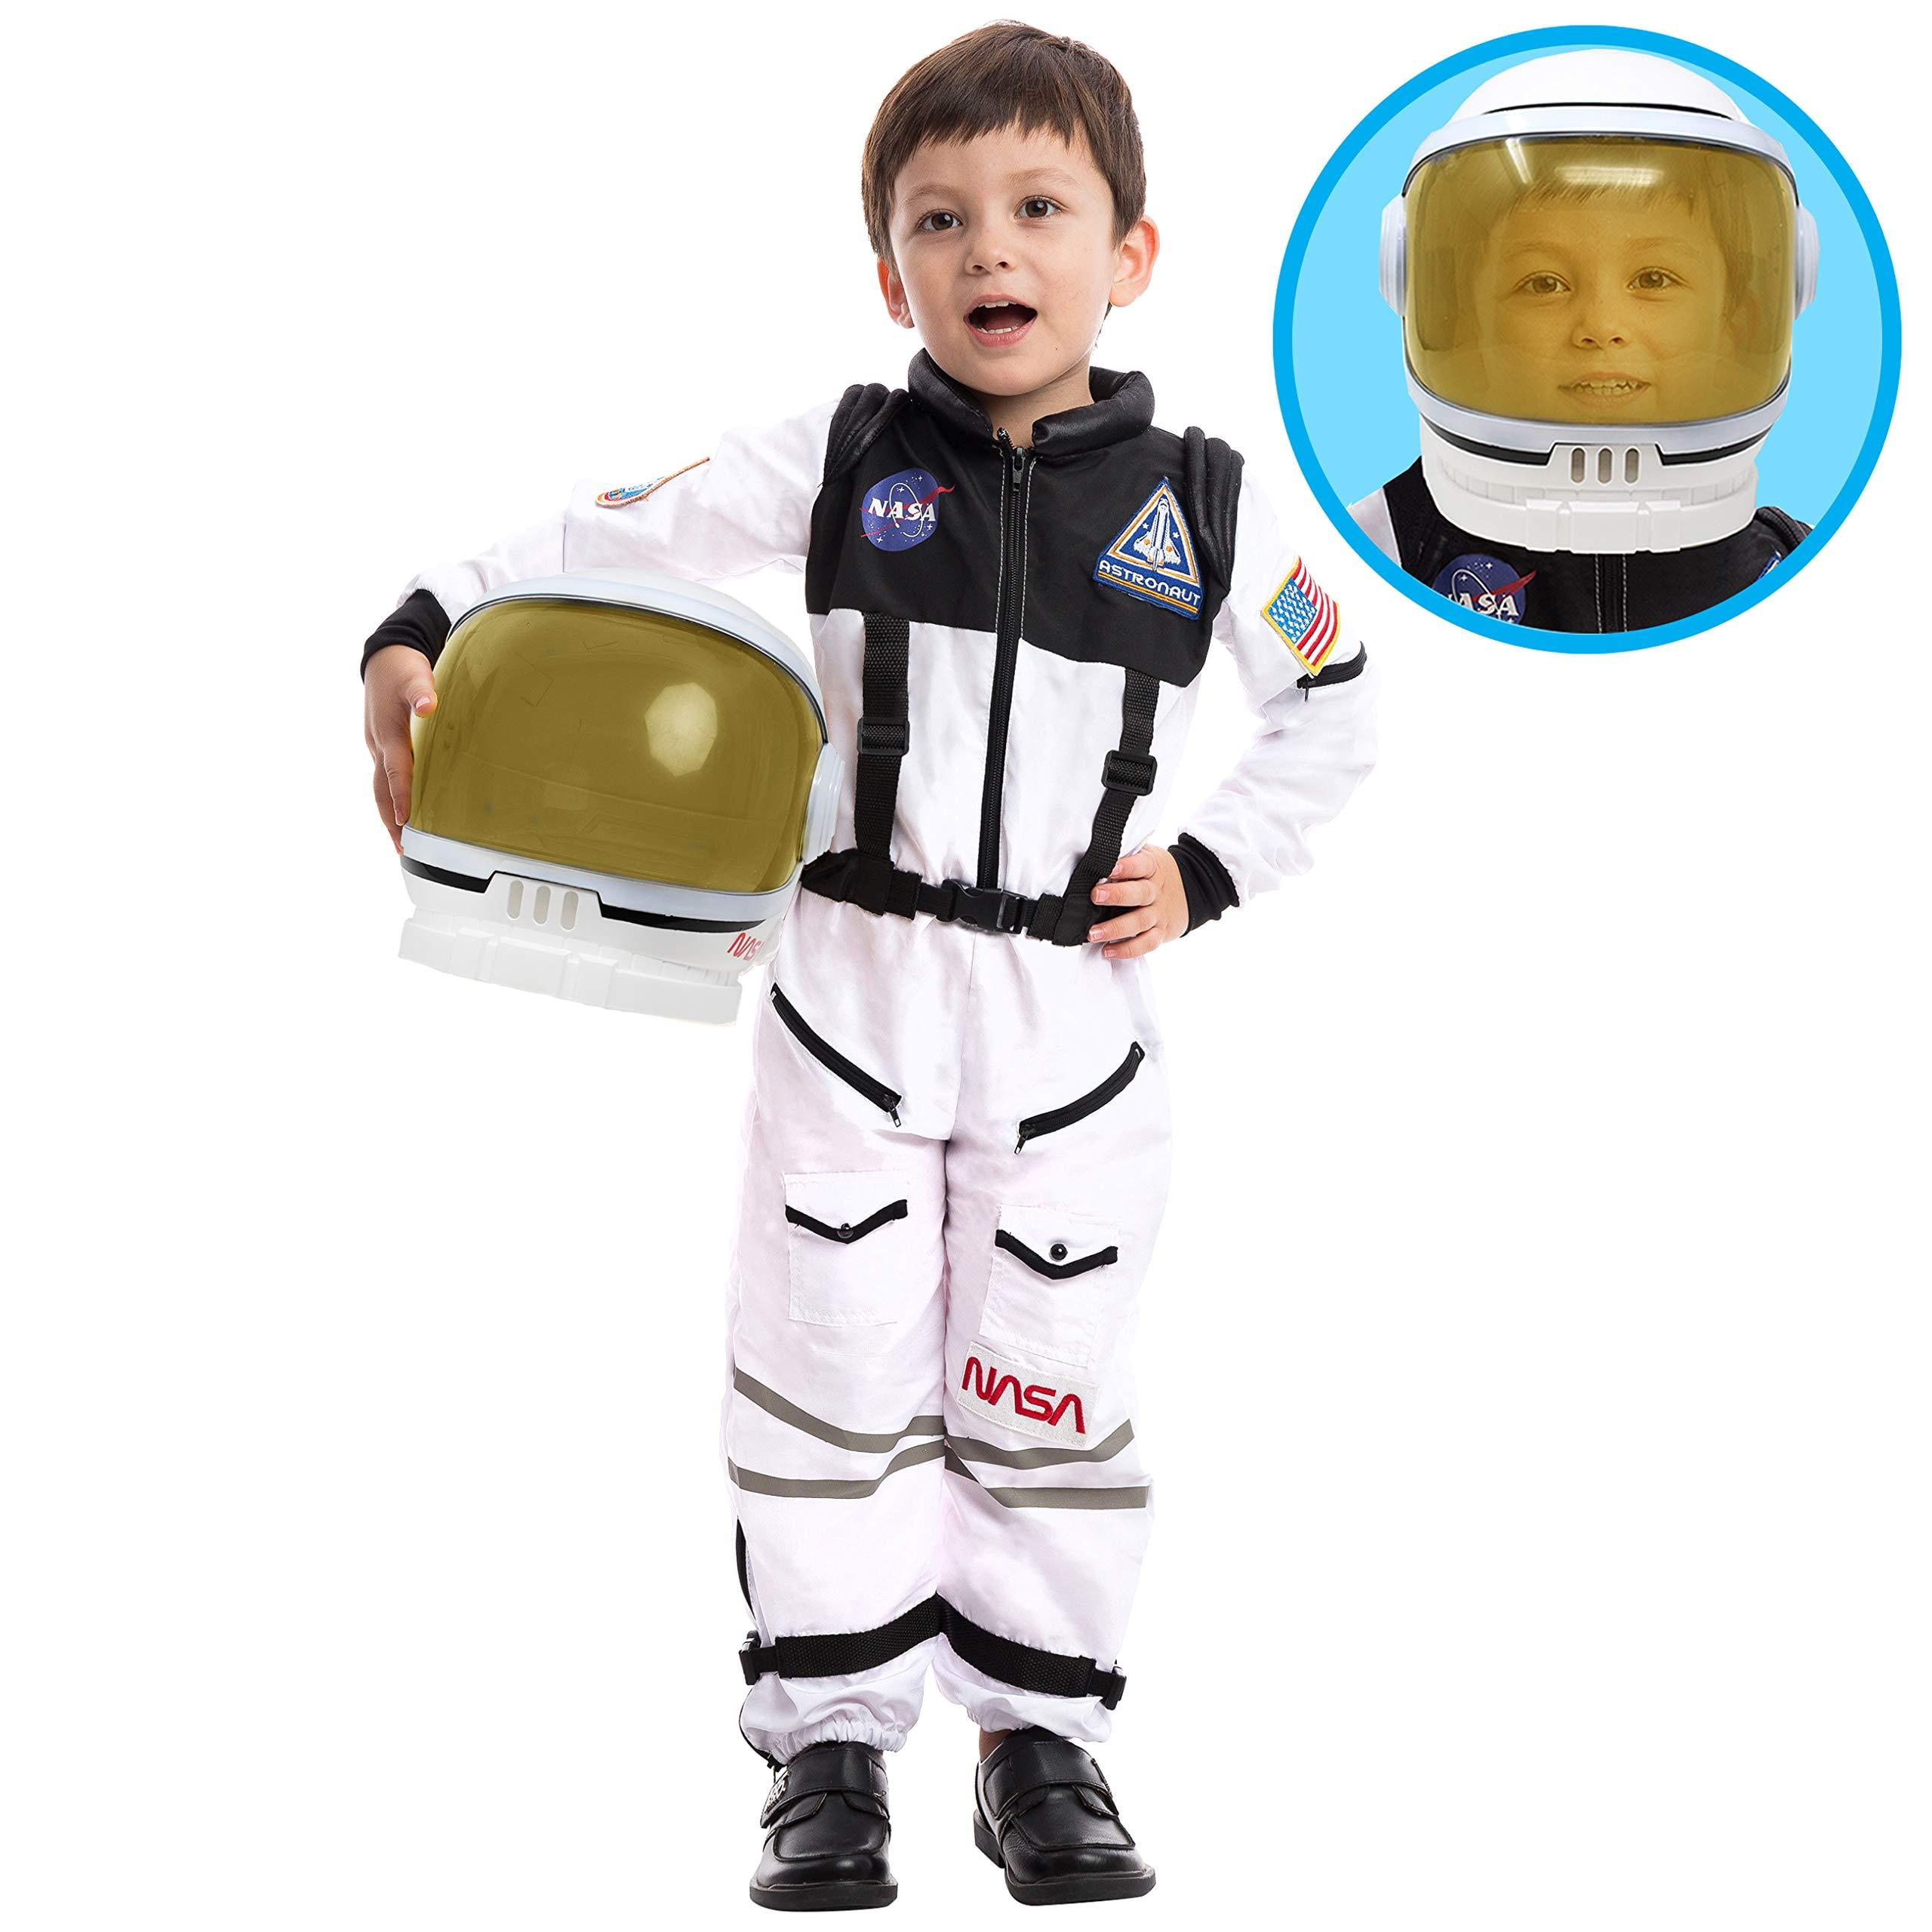 astronaut-nasa-pilot-costume-with-movable-visor-helmet-for-kids-boys